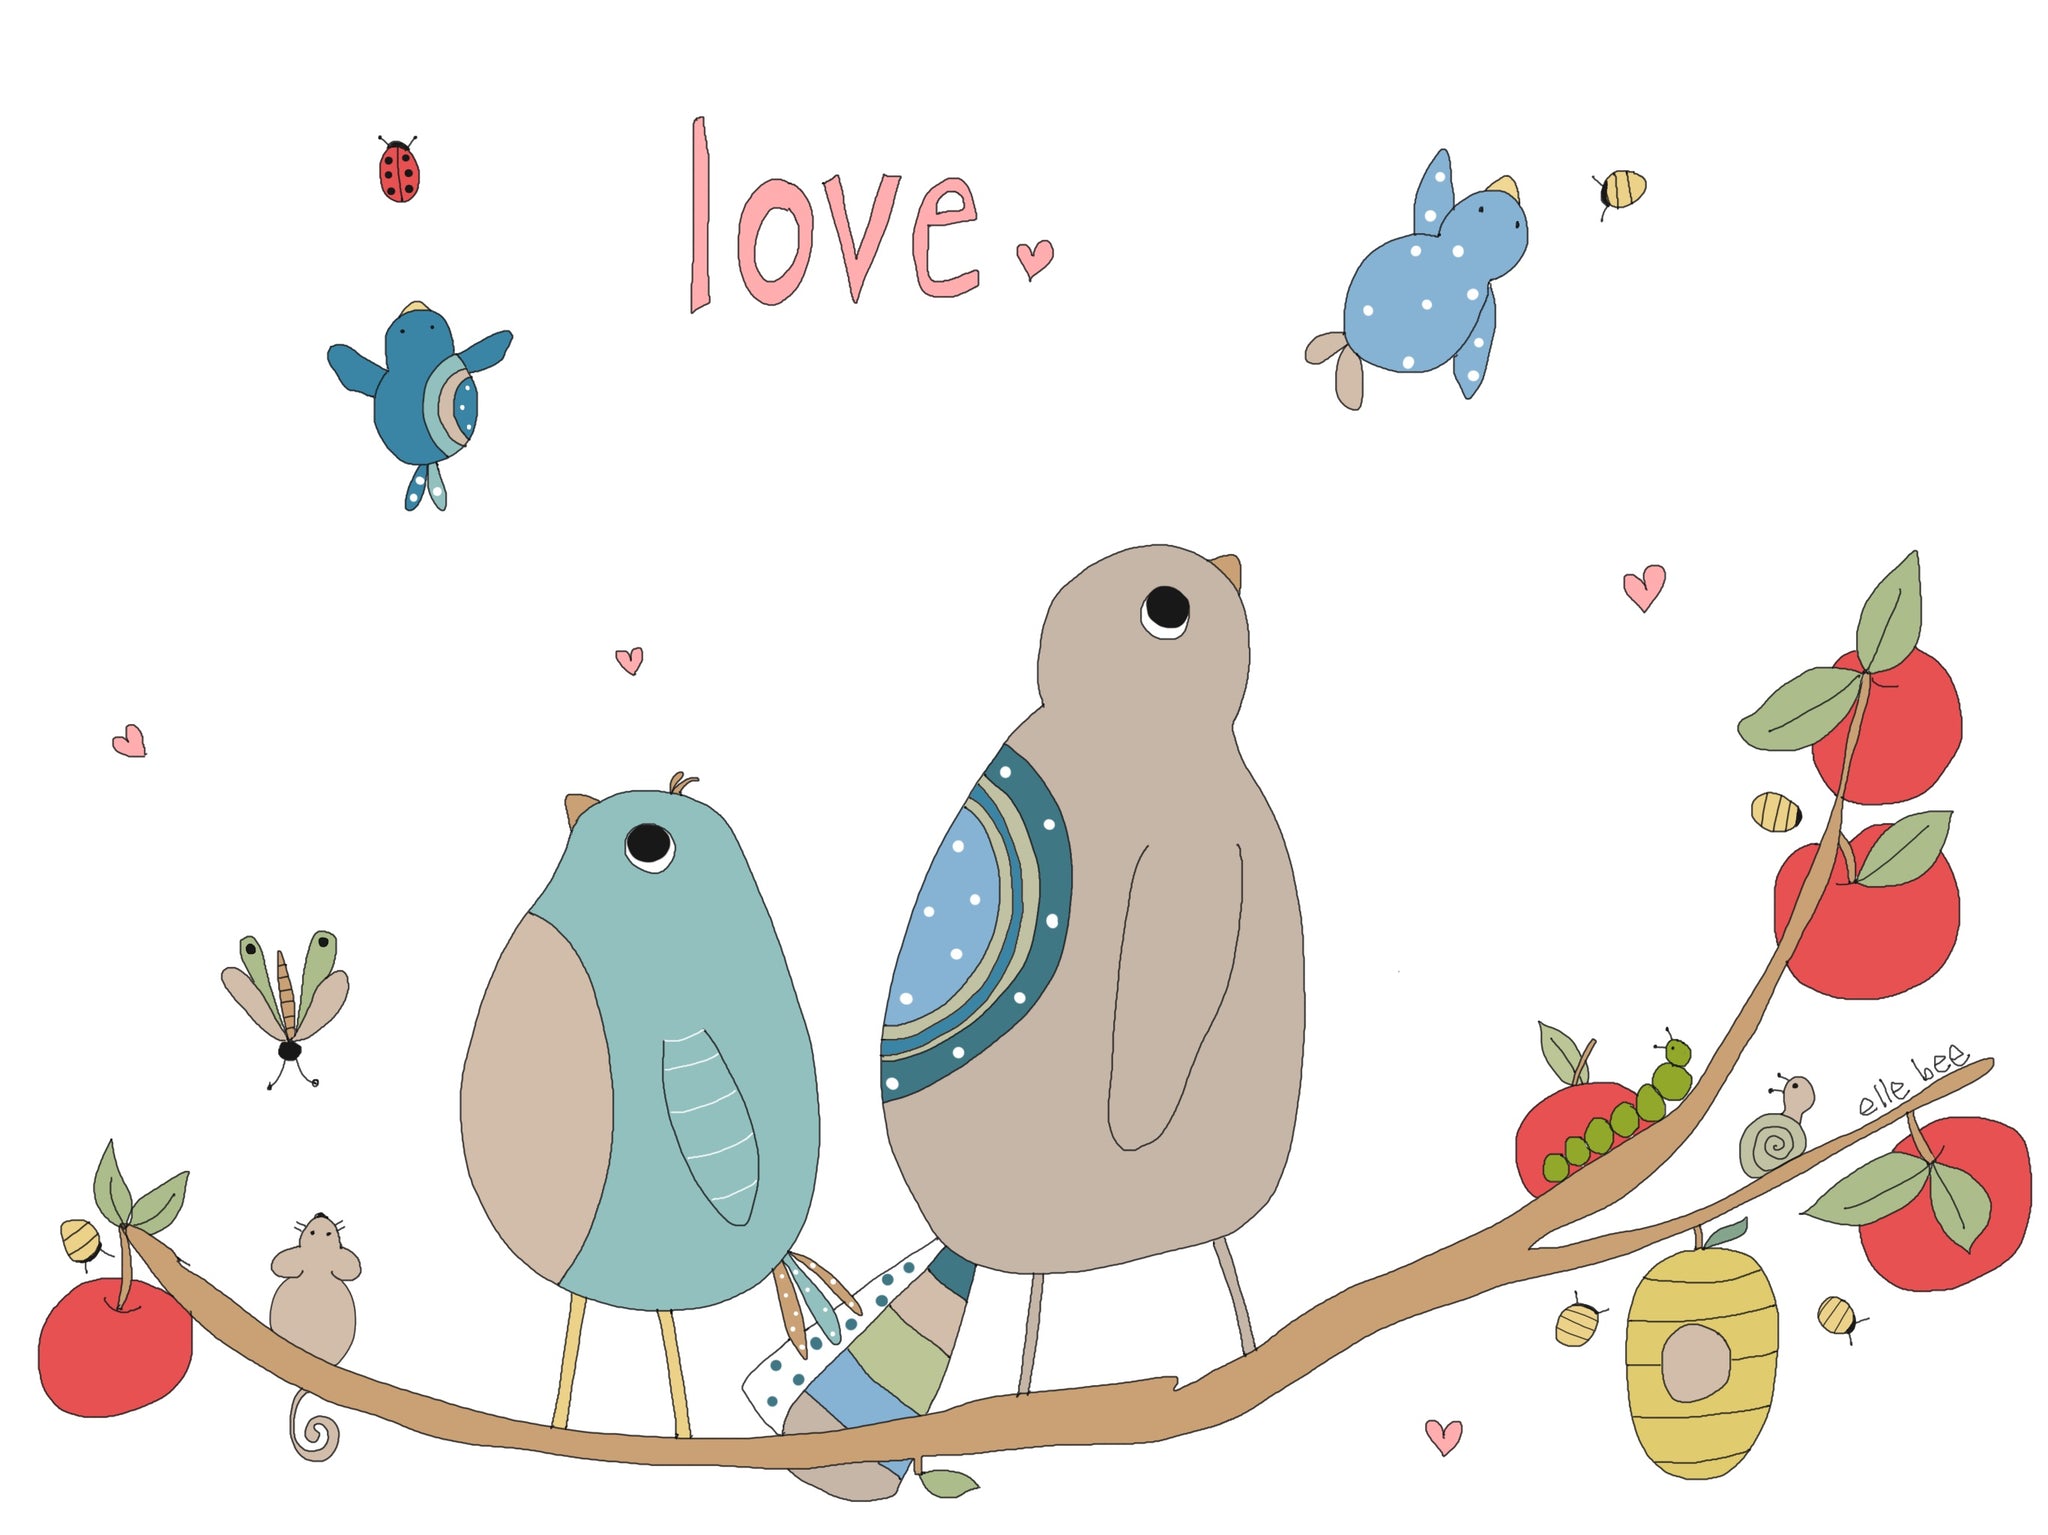 “Love takes flight” greeting card